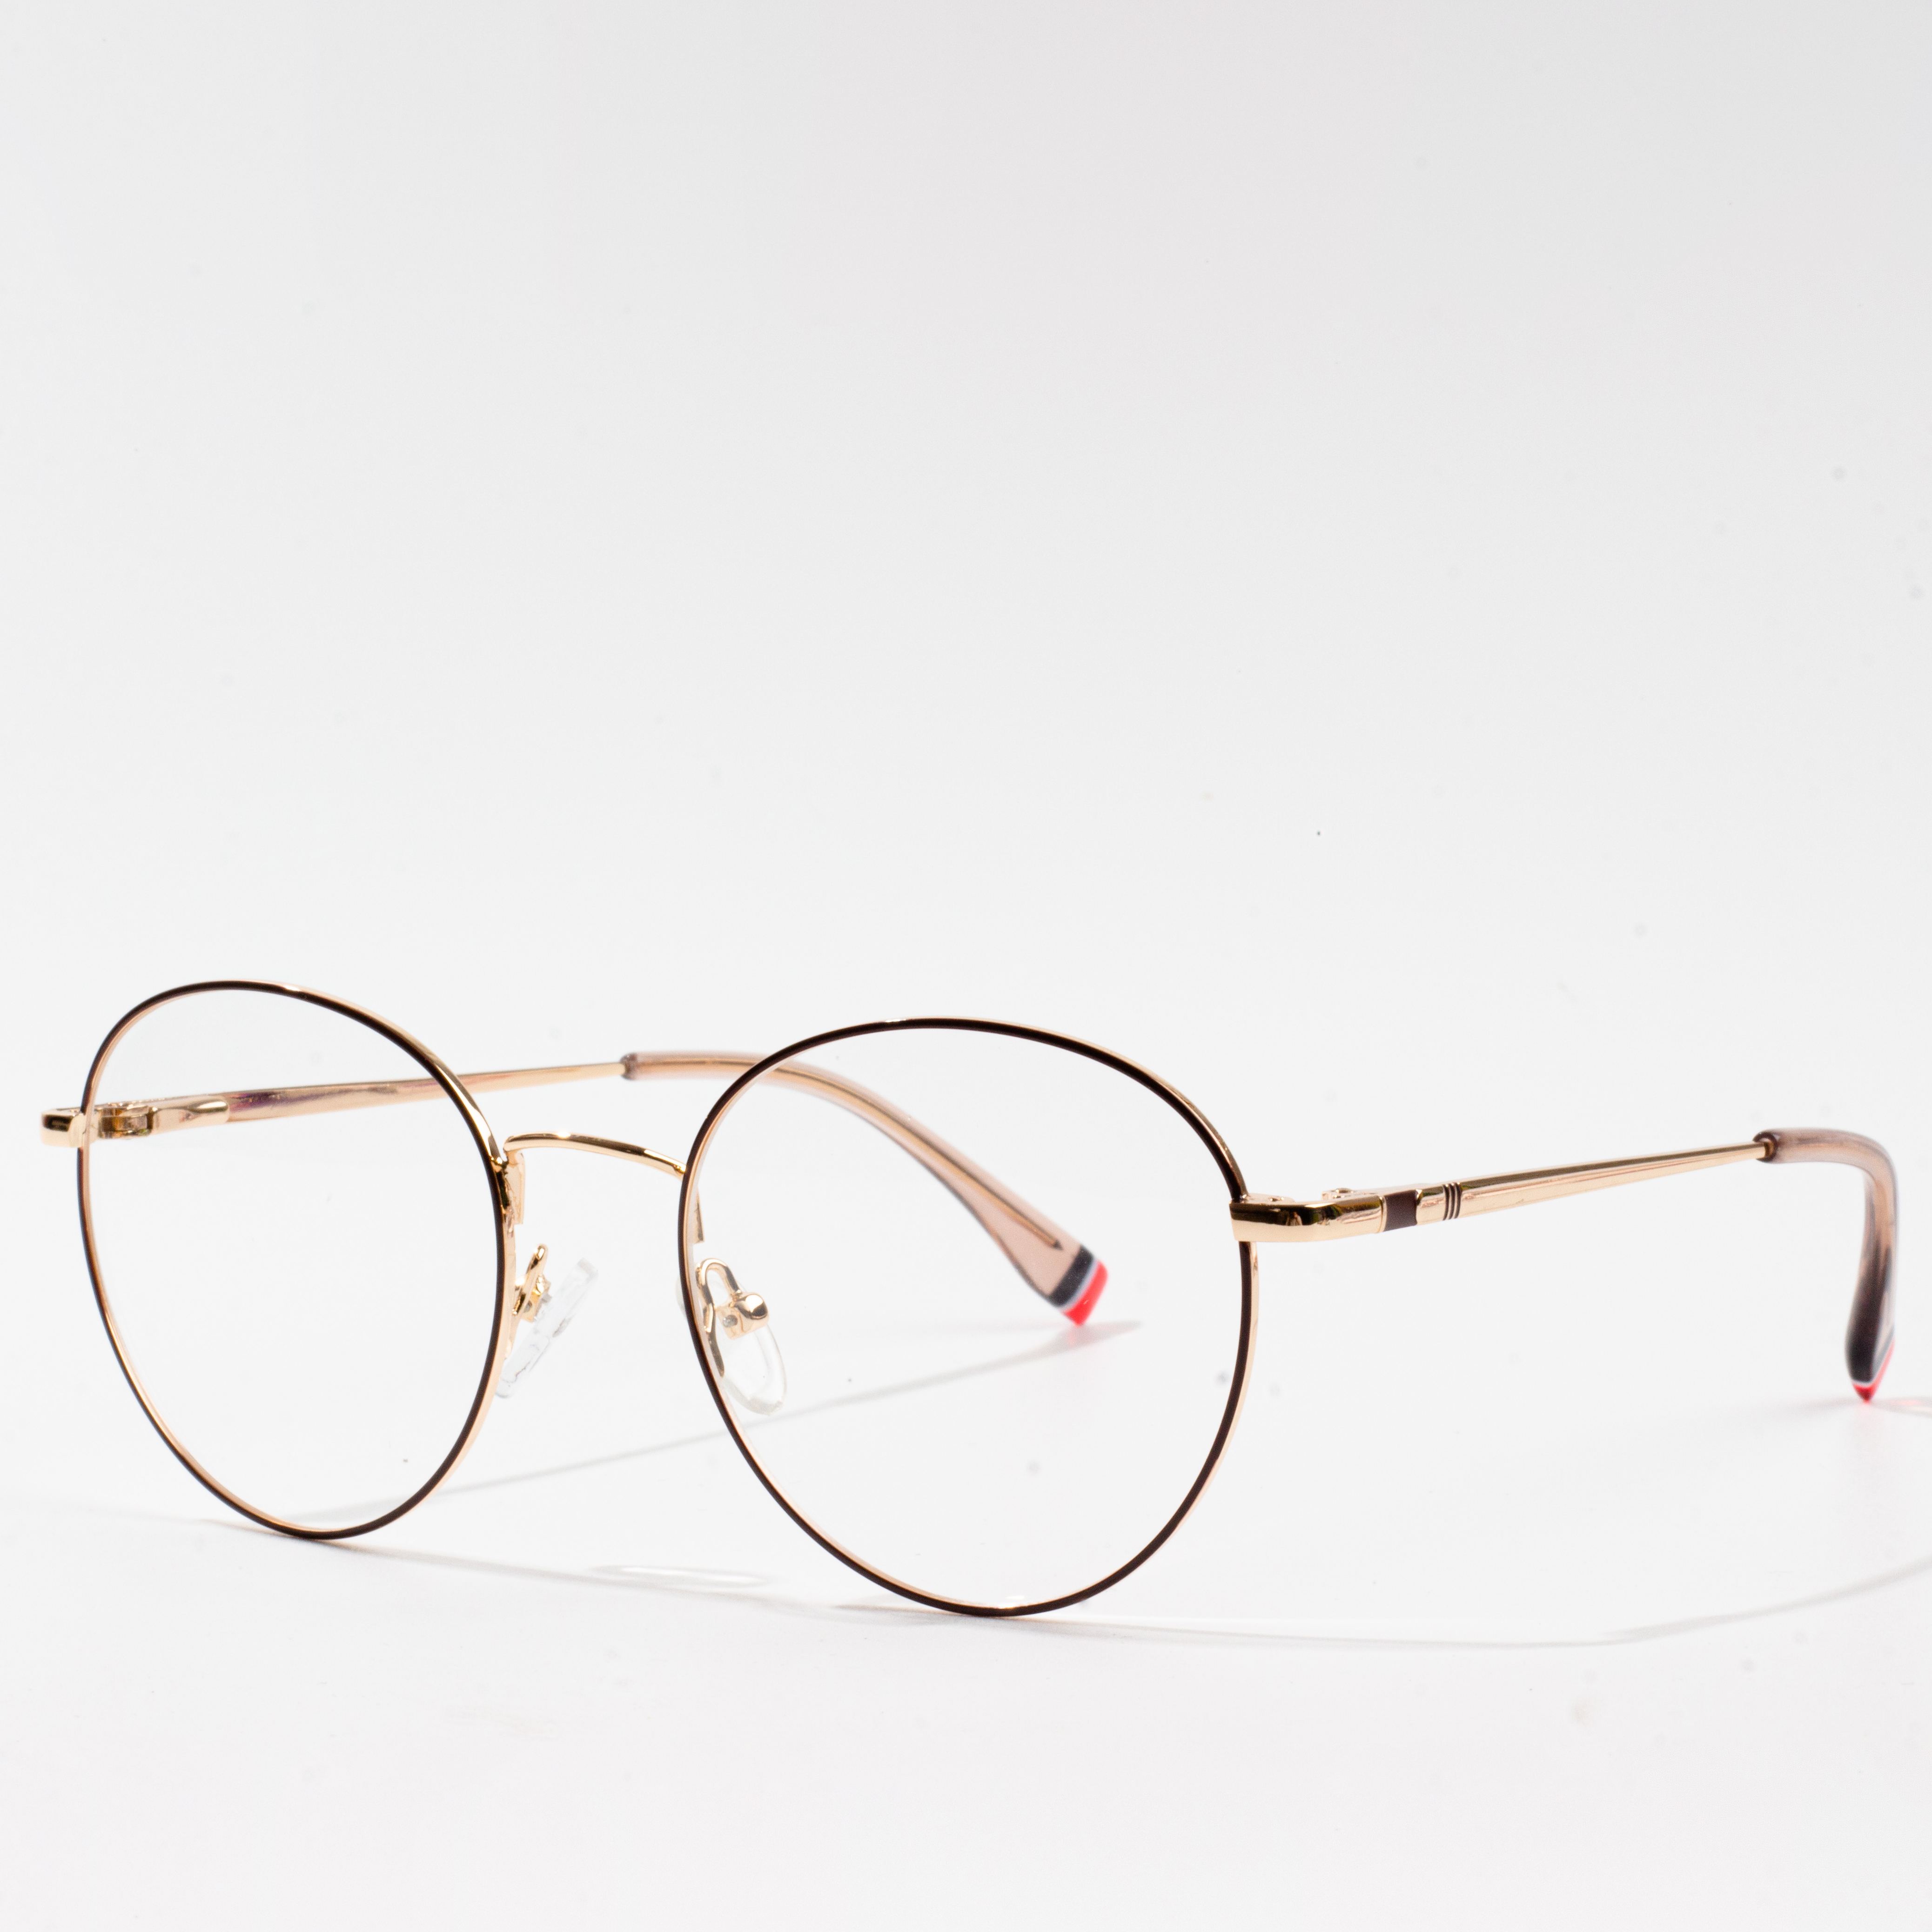 custom made eyeglass frames